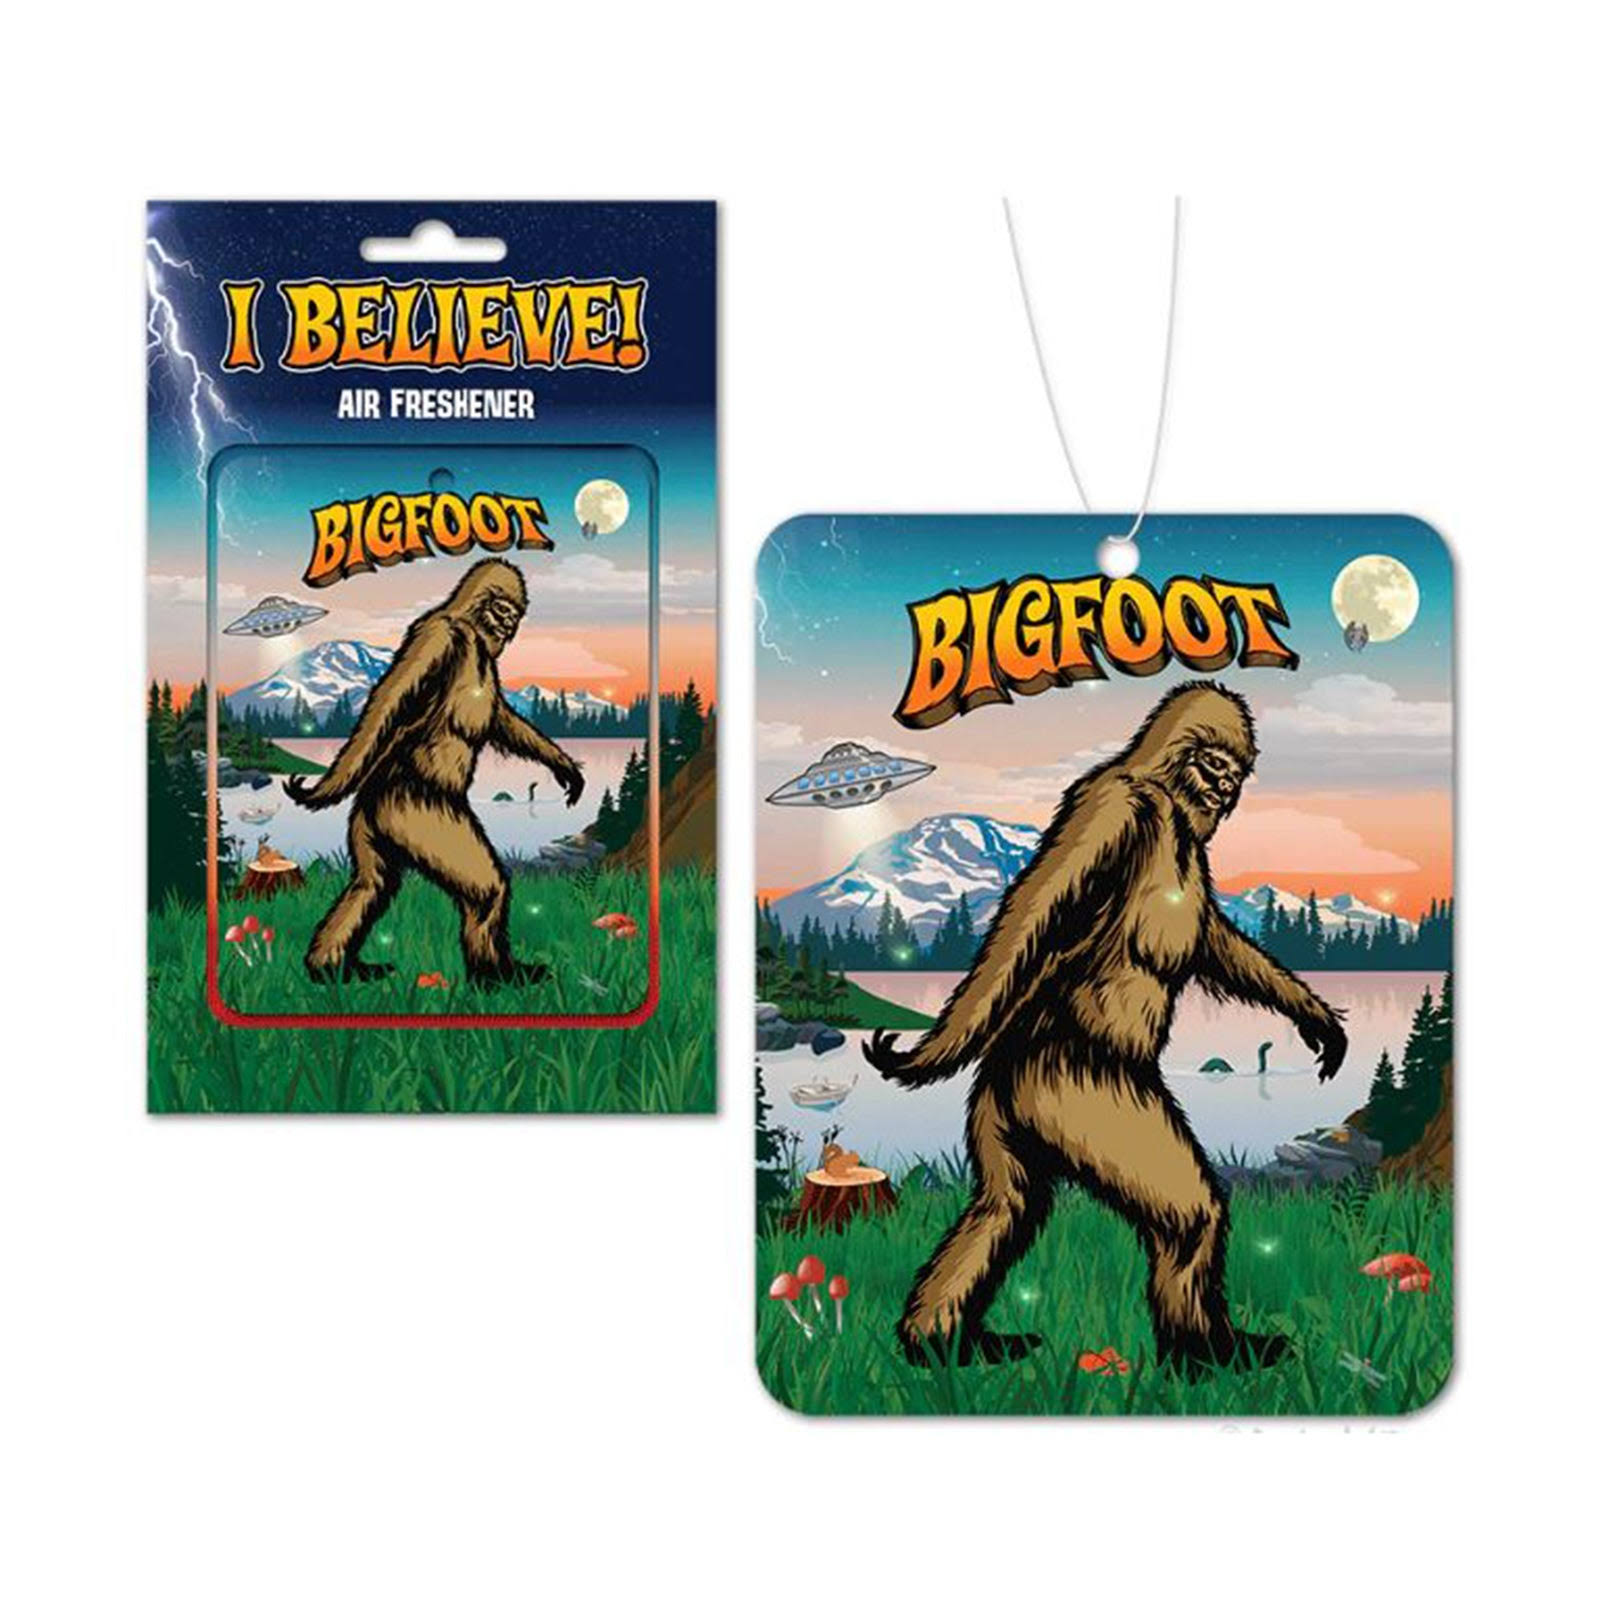 I Believe Bigfoot Air Freshener